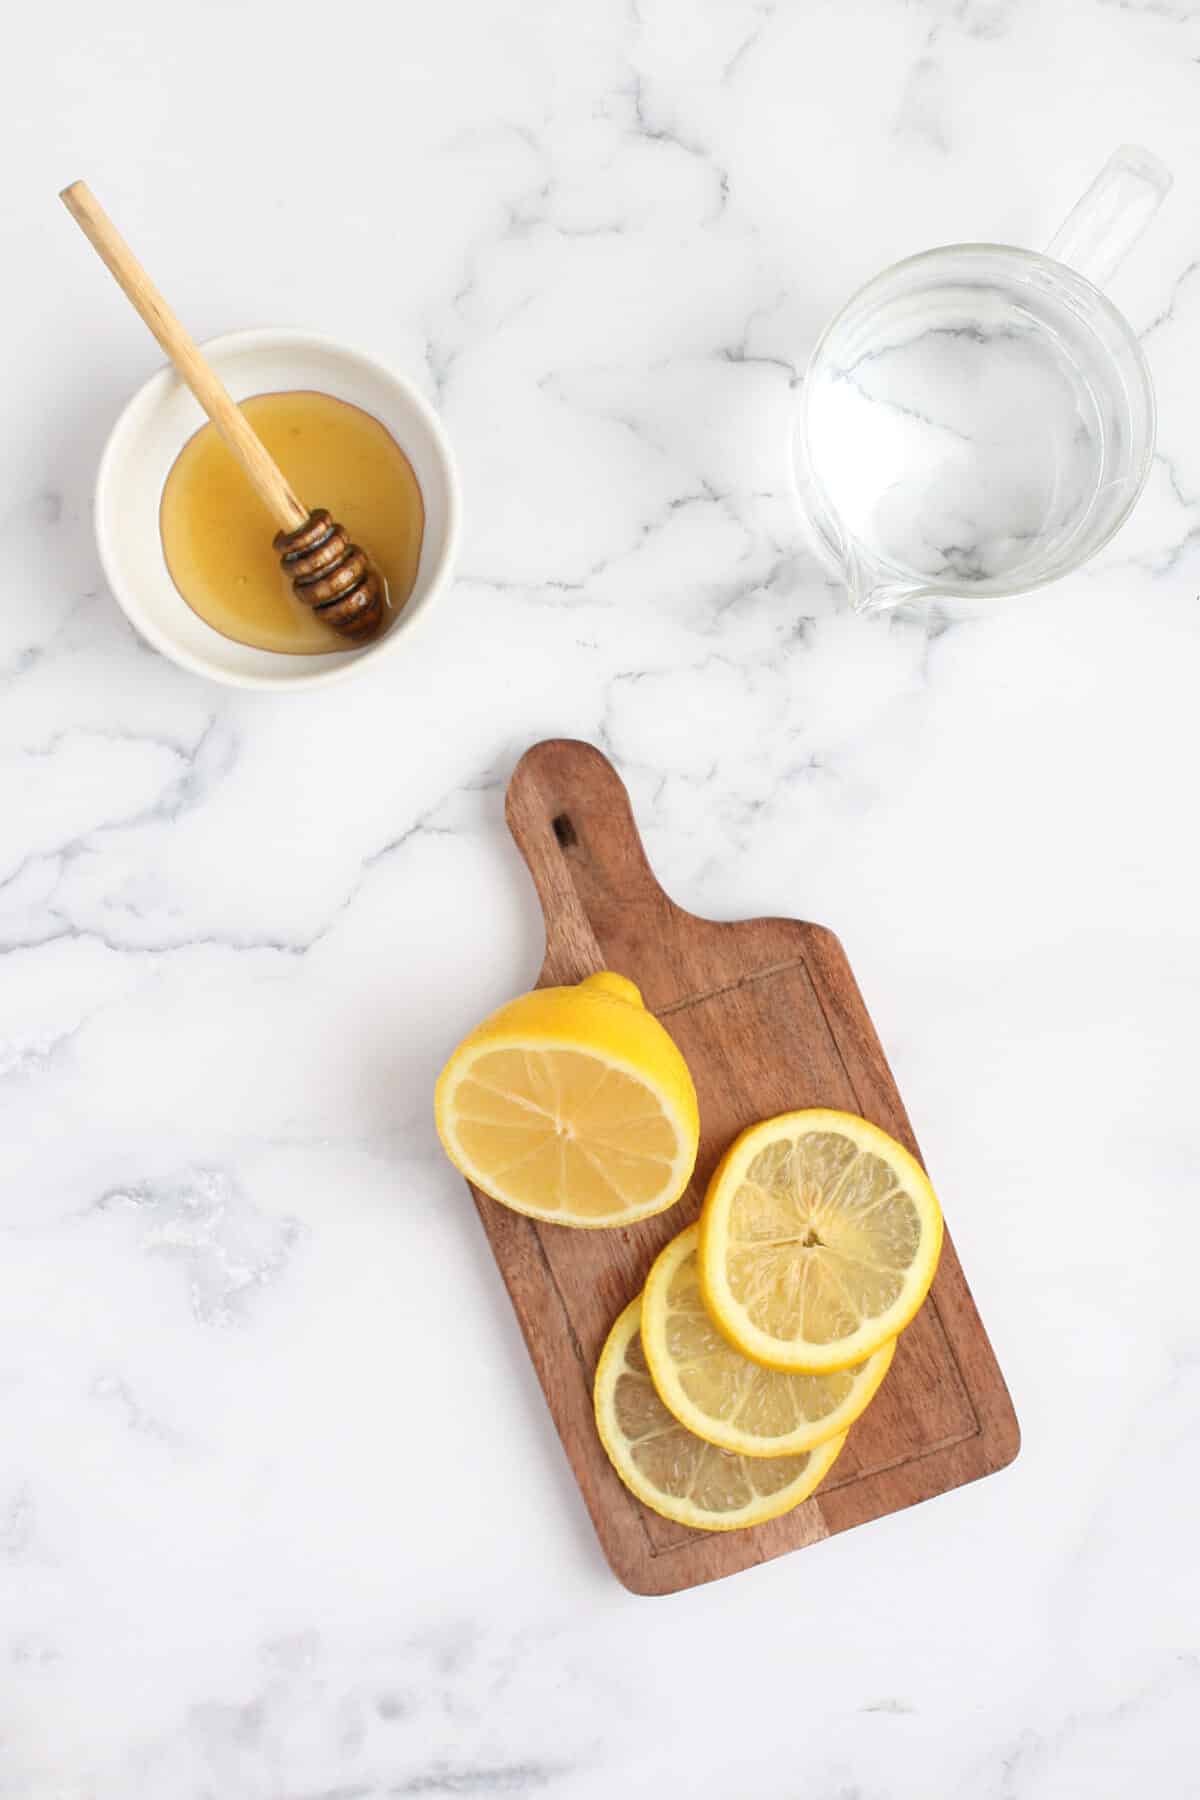 Ingredients of Honey Lemon Cold Medicine